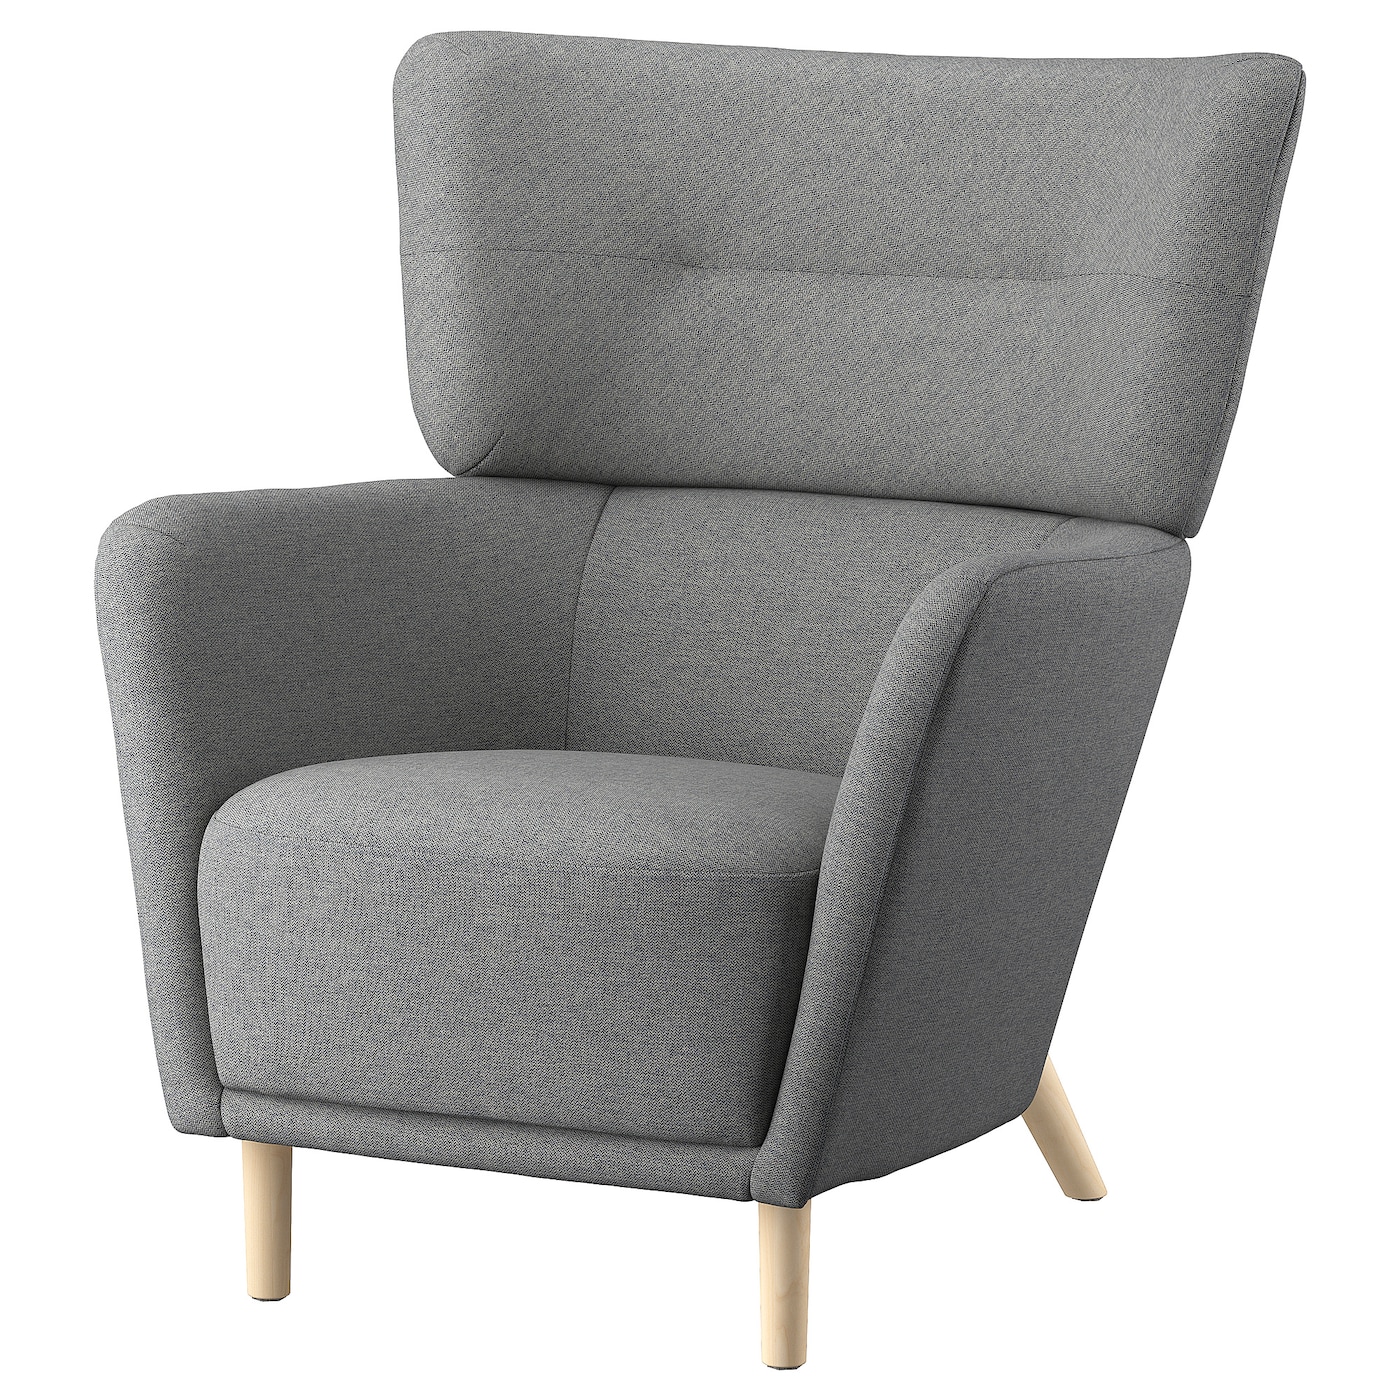 Кресло -IKEA OSKARSHAMN, 82х86х99 см, бежевый/серый, ОСКАРСХАМН ИКЕА